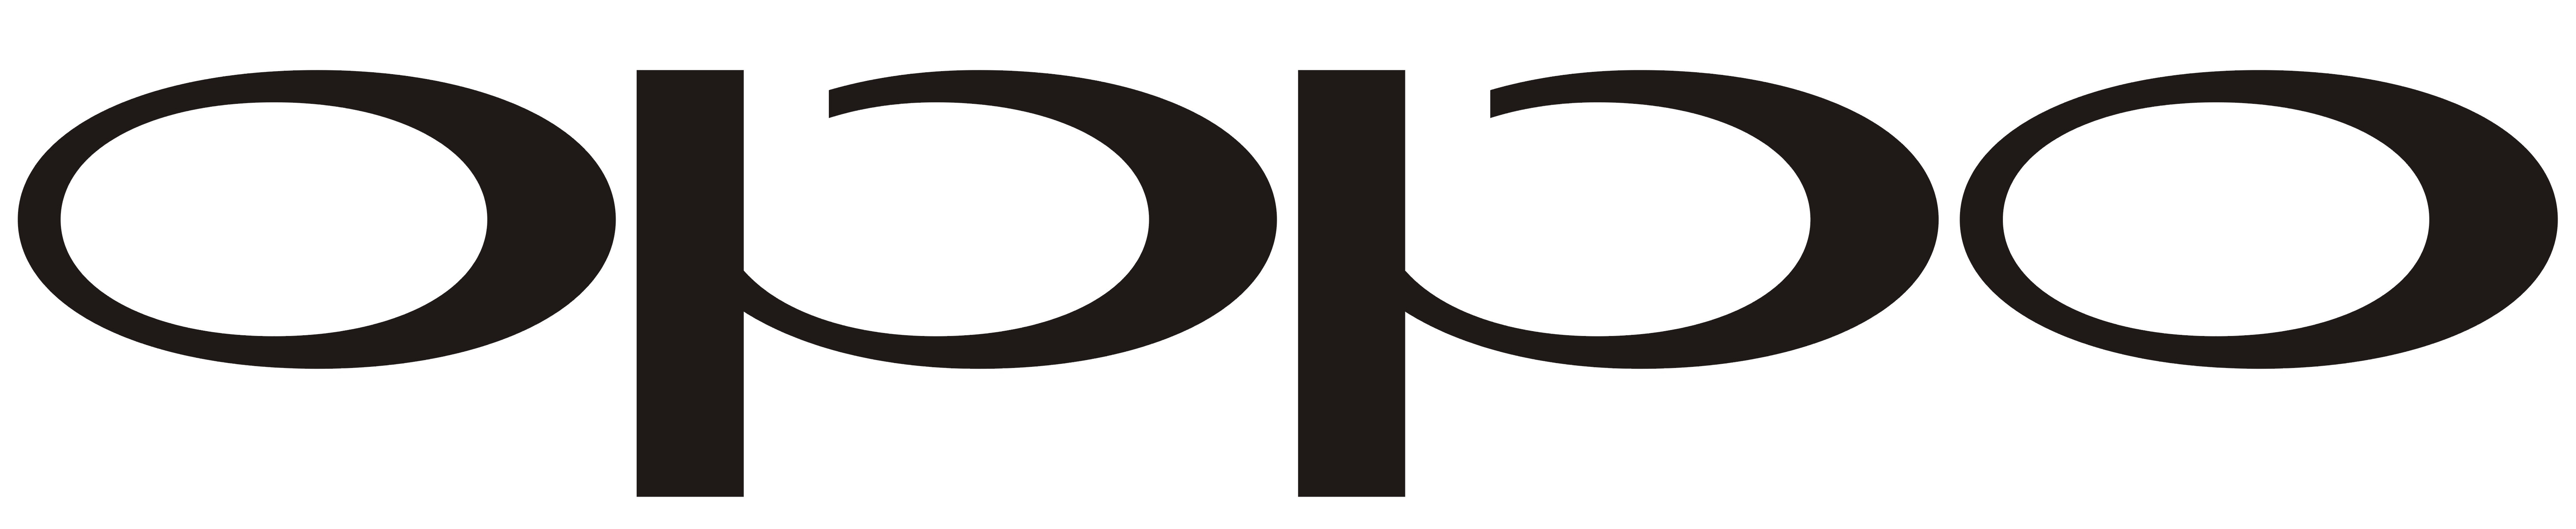 Oppo Electronics Logo photo - 1